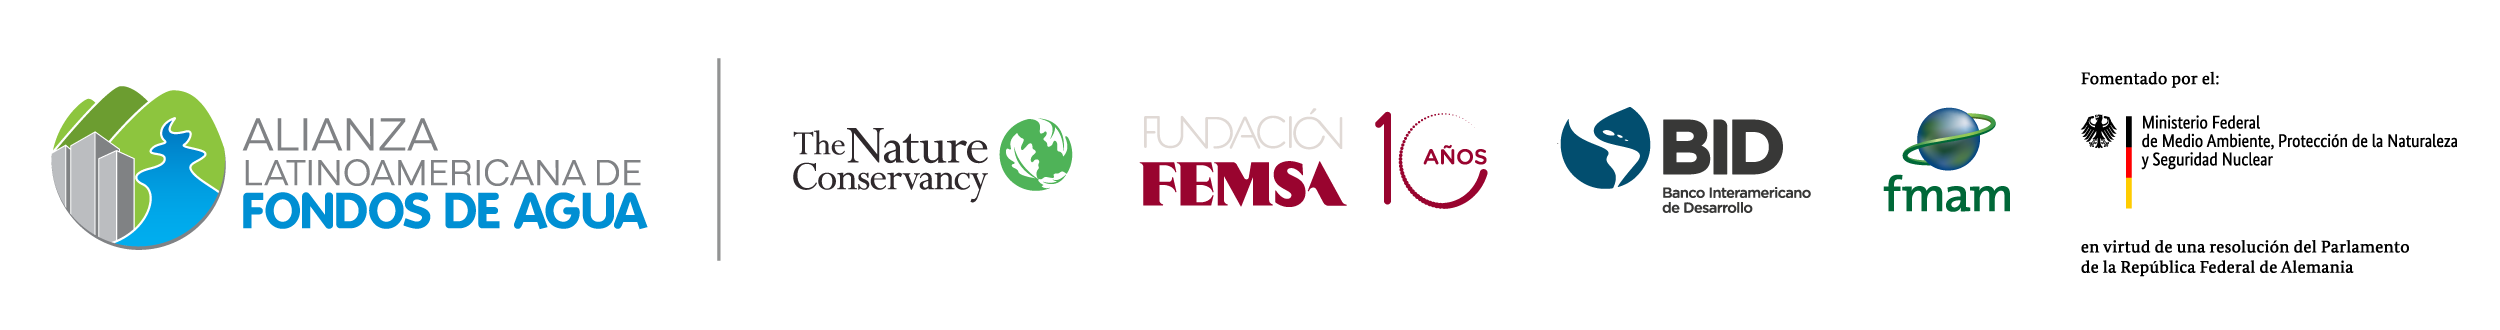 //fondagua.org/wp-content/uploads/2019/11/logo_alianza_horizontal_FEMSA-10ANIV_BMU.png